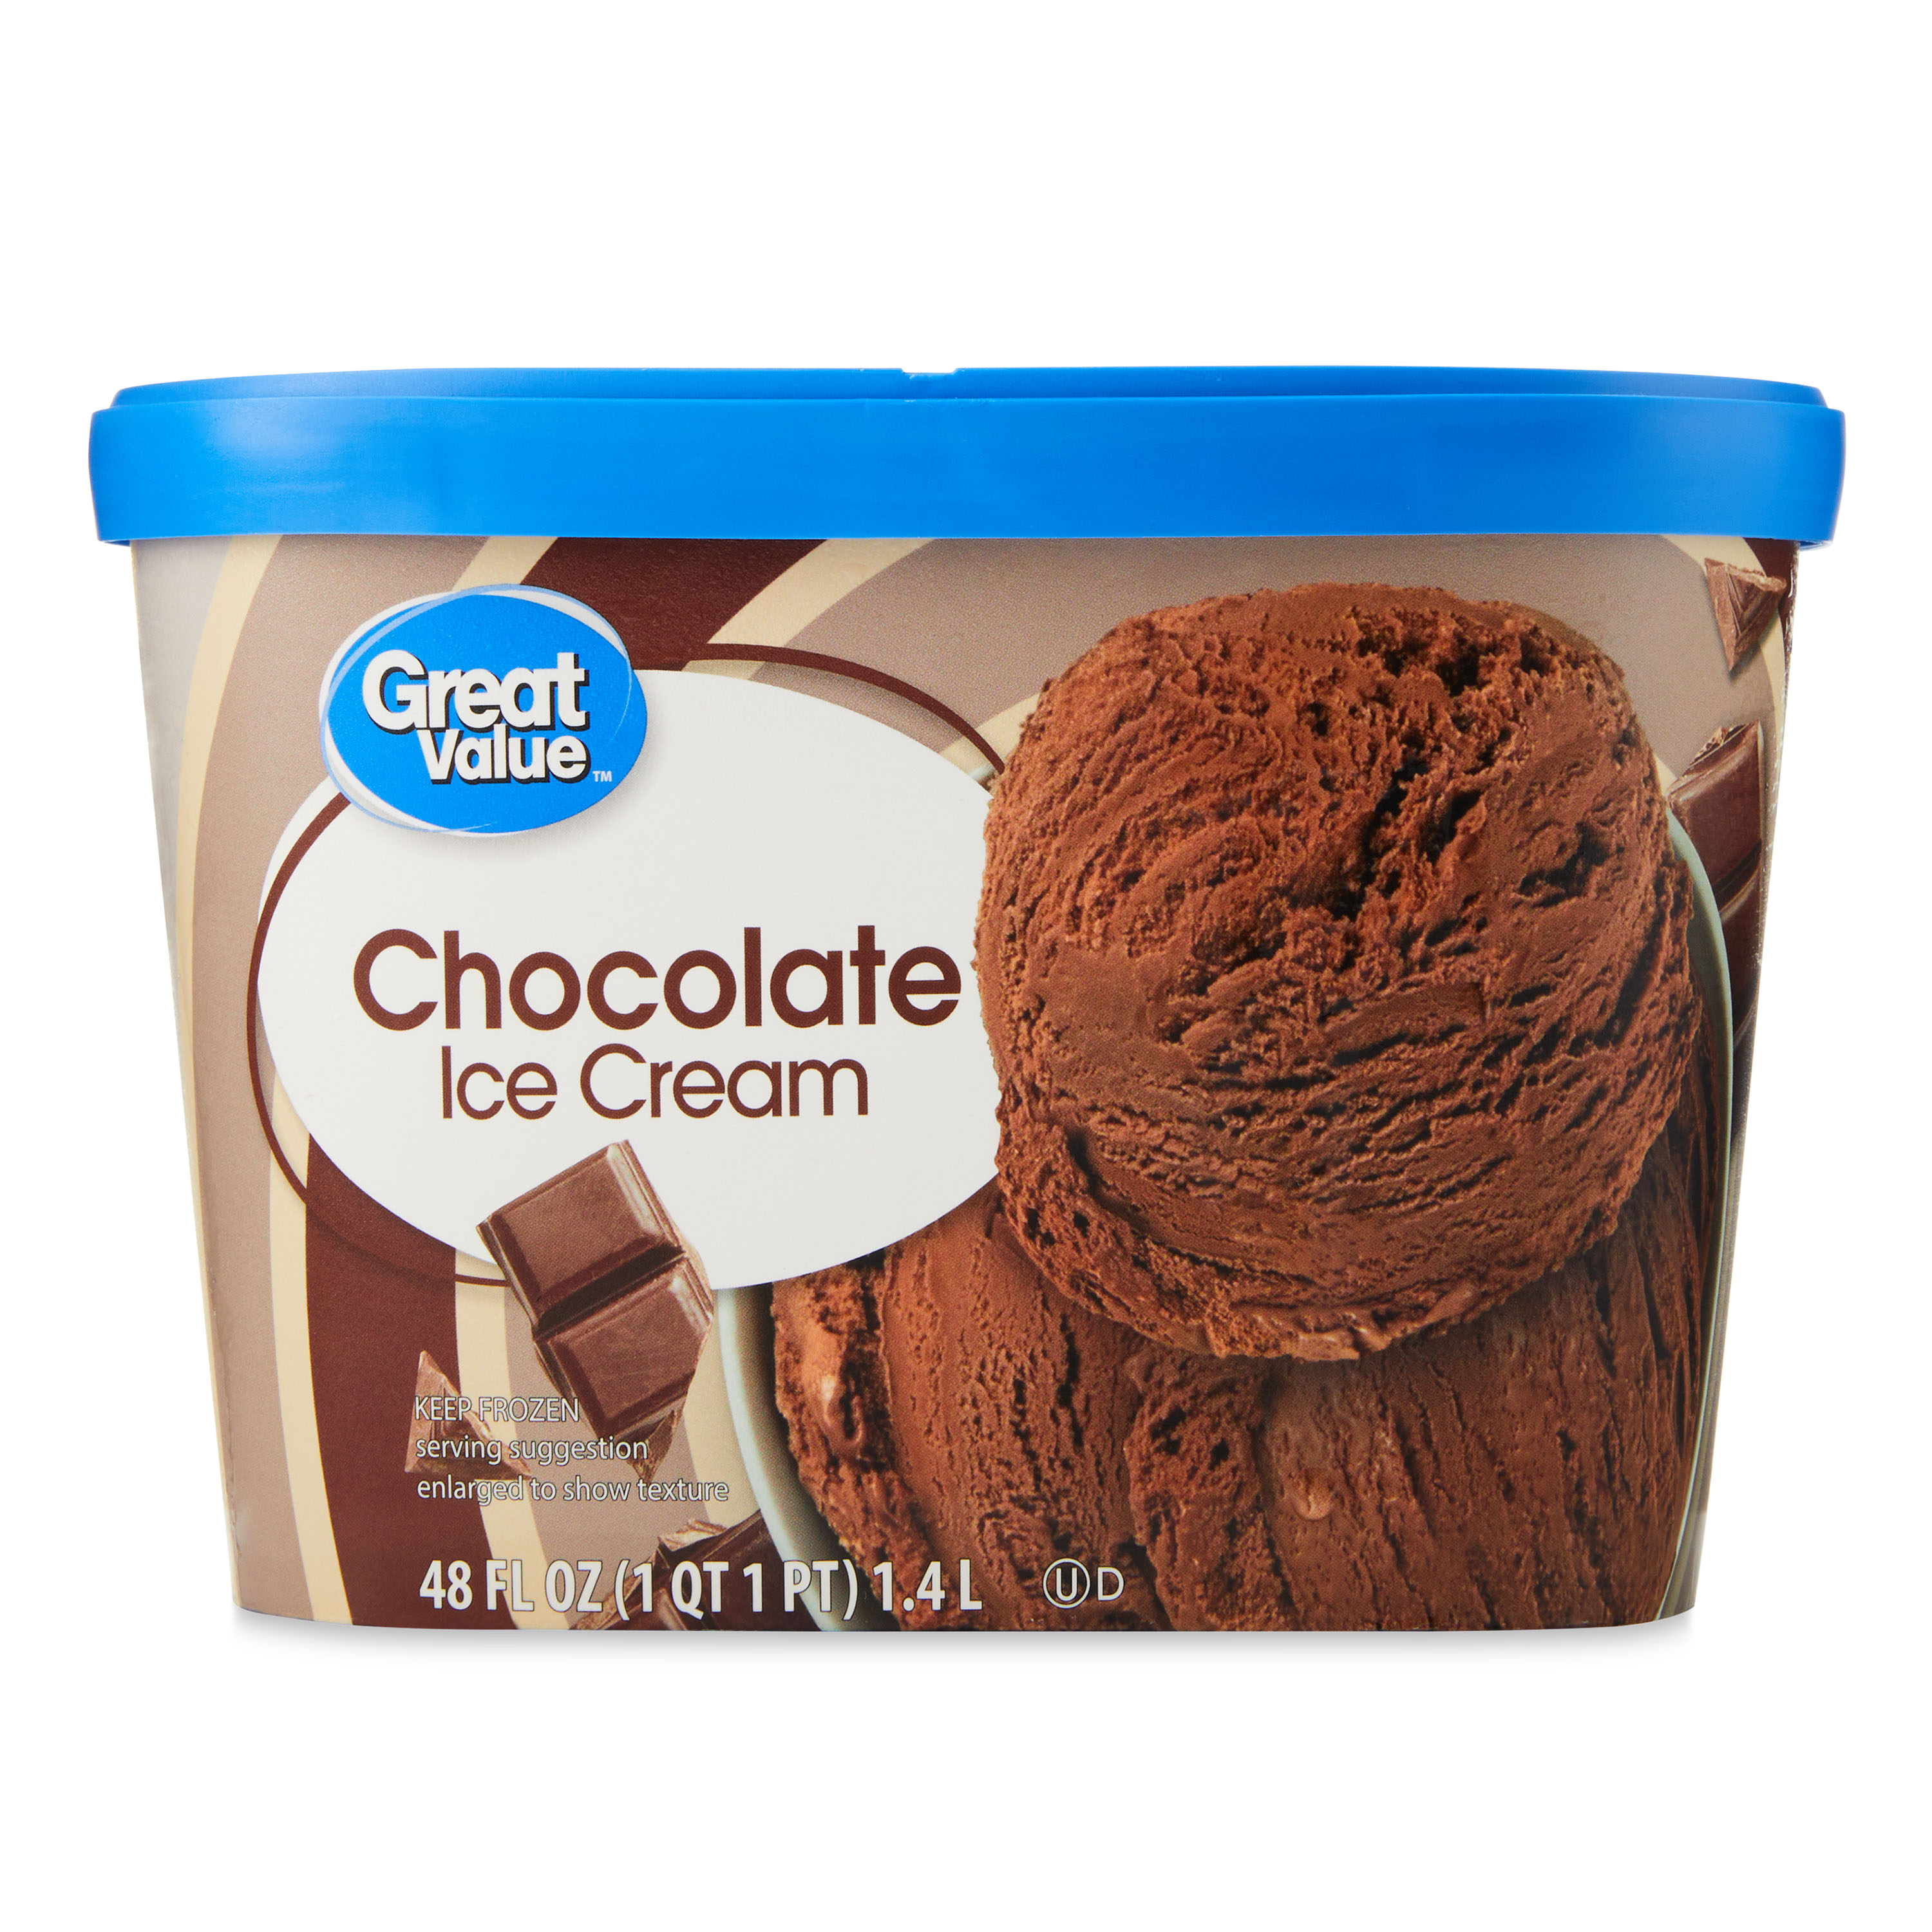 Great Value Chocolate Ice Cream, 48 fl oz - image 1 of 8